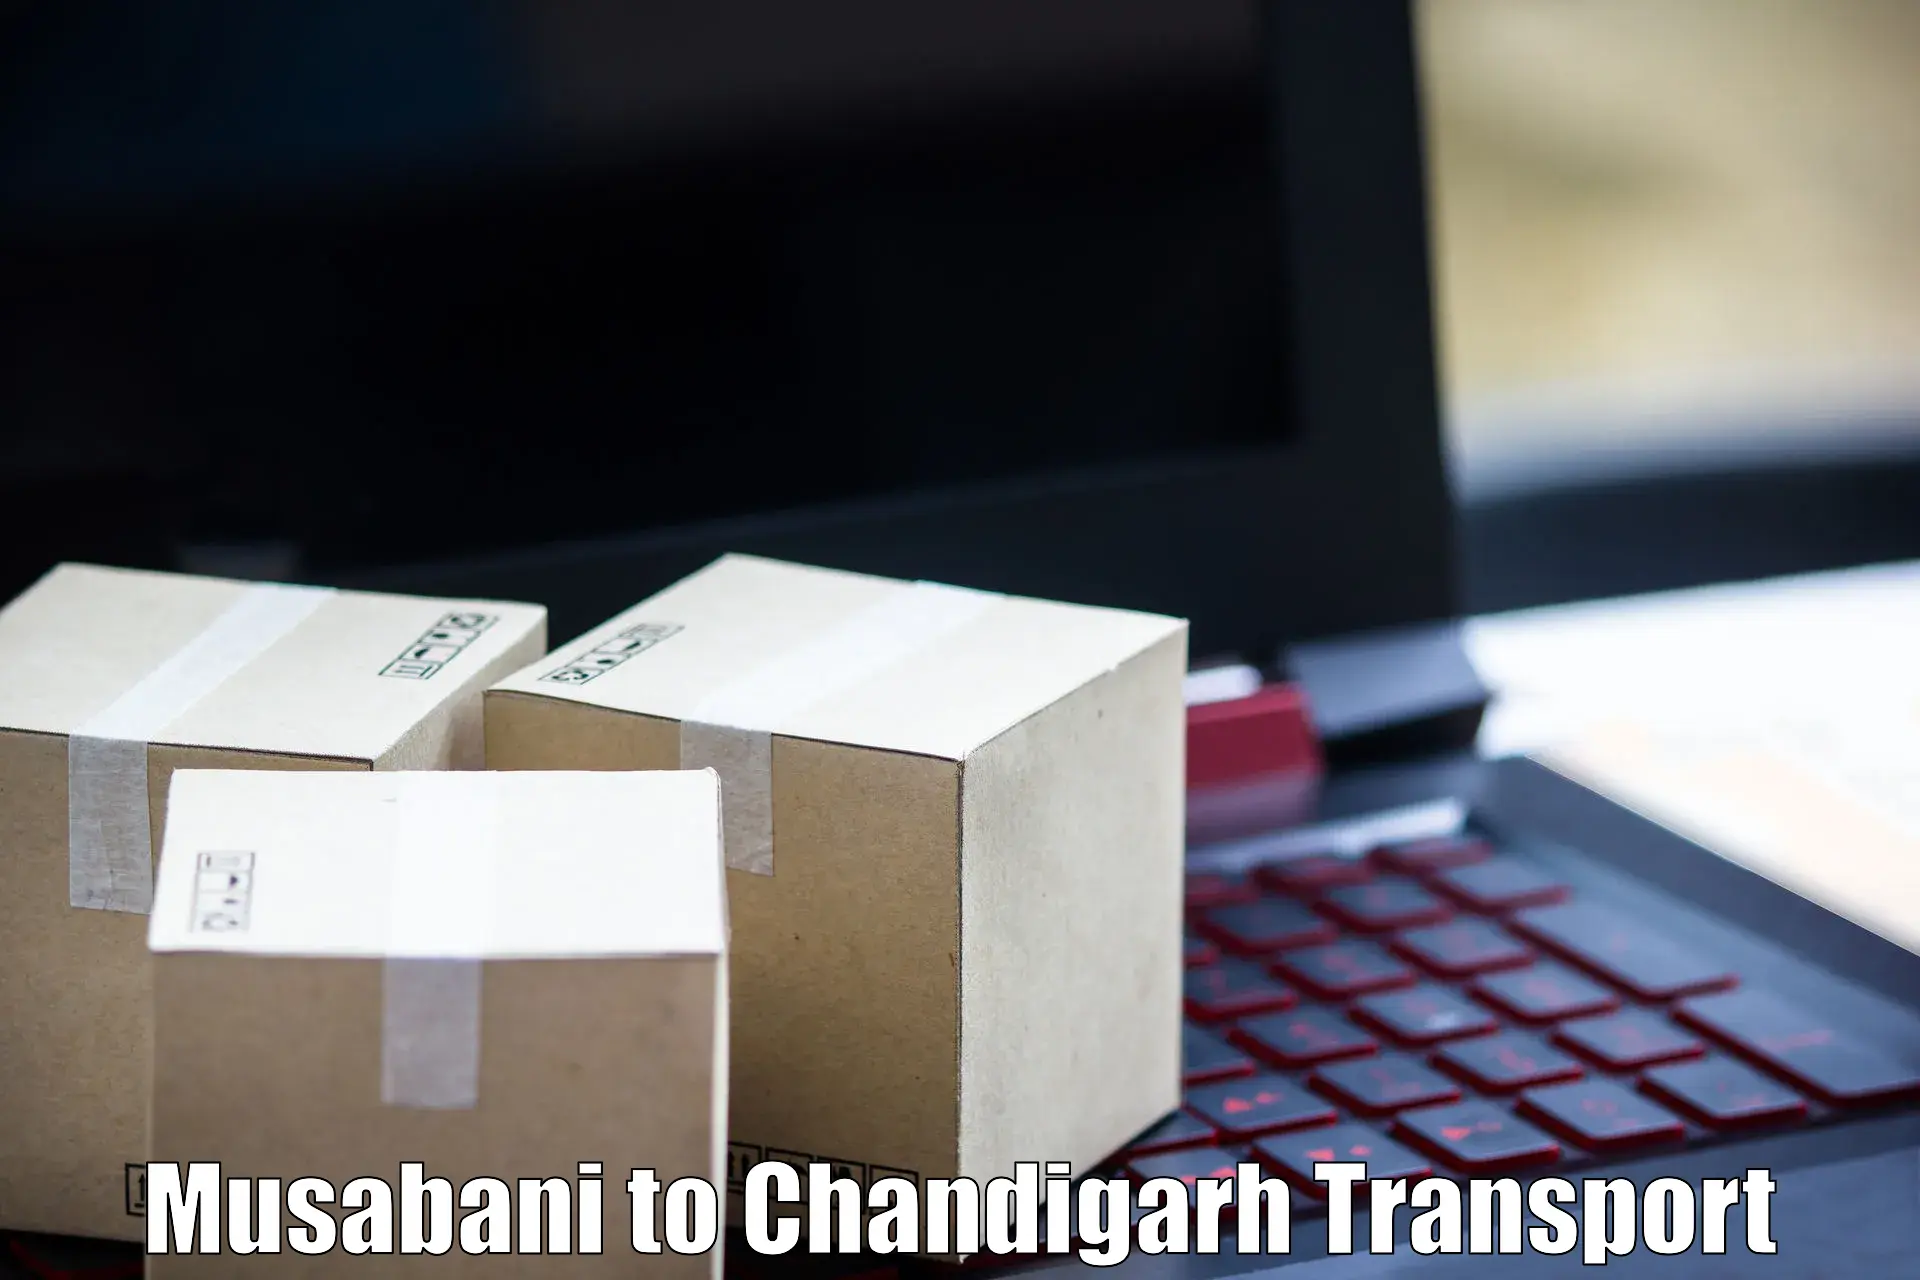 Online transport service Musabani to Chandigarh